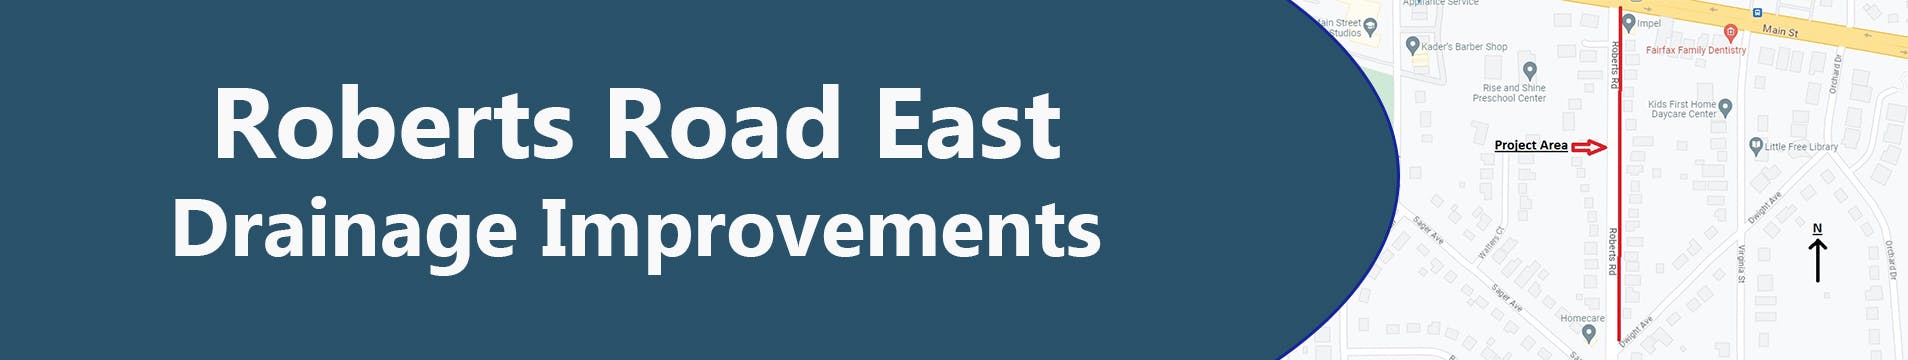 Roberts Road East Drainage Improvements